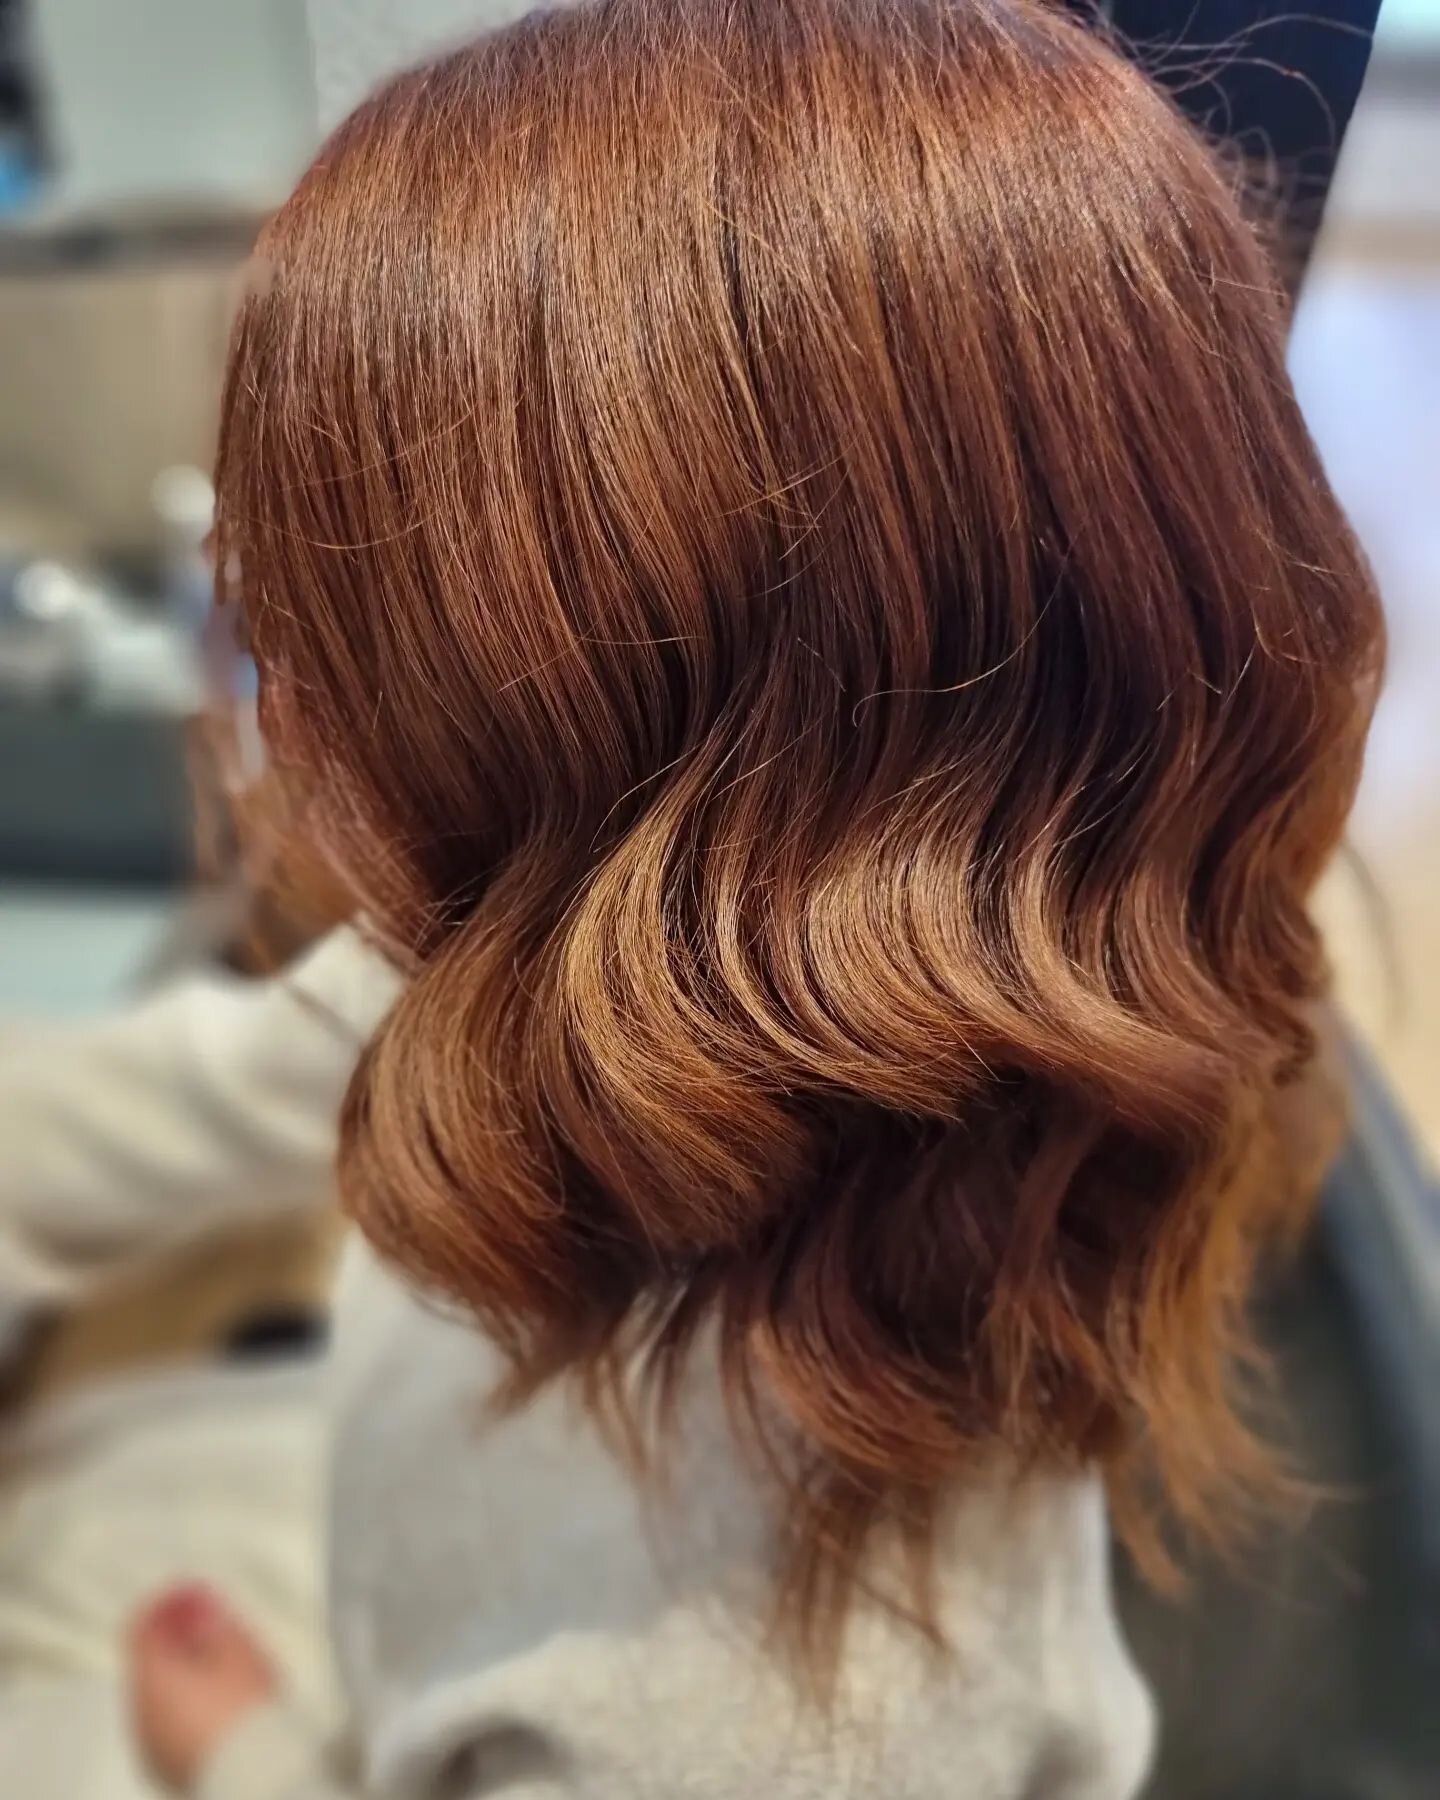 Inoa 7.43 + 744 10vol

#inoa #lorealprofessionnel #lorealsalon #copper #redhead #shine #gloss #waves #texture #southyarra #southyarrasalon #hairsalon #thelabforhair #southyarrahairsalon #southyarrahairdressers